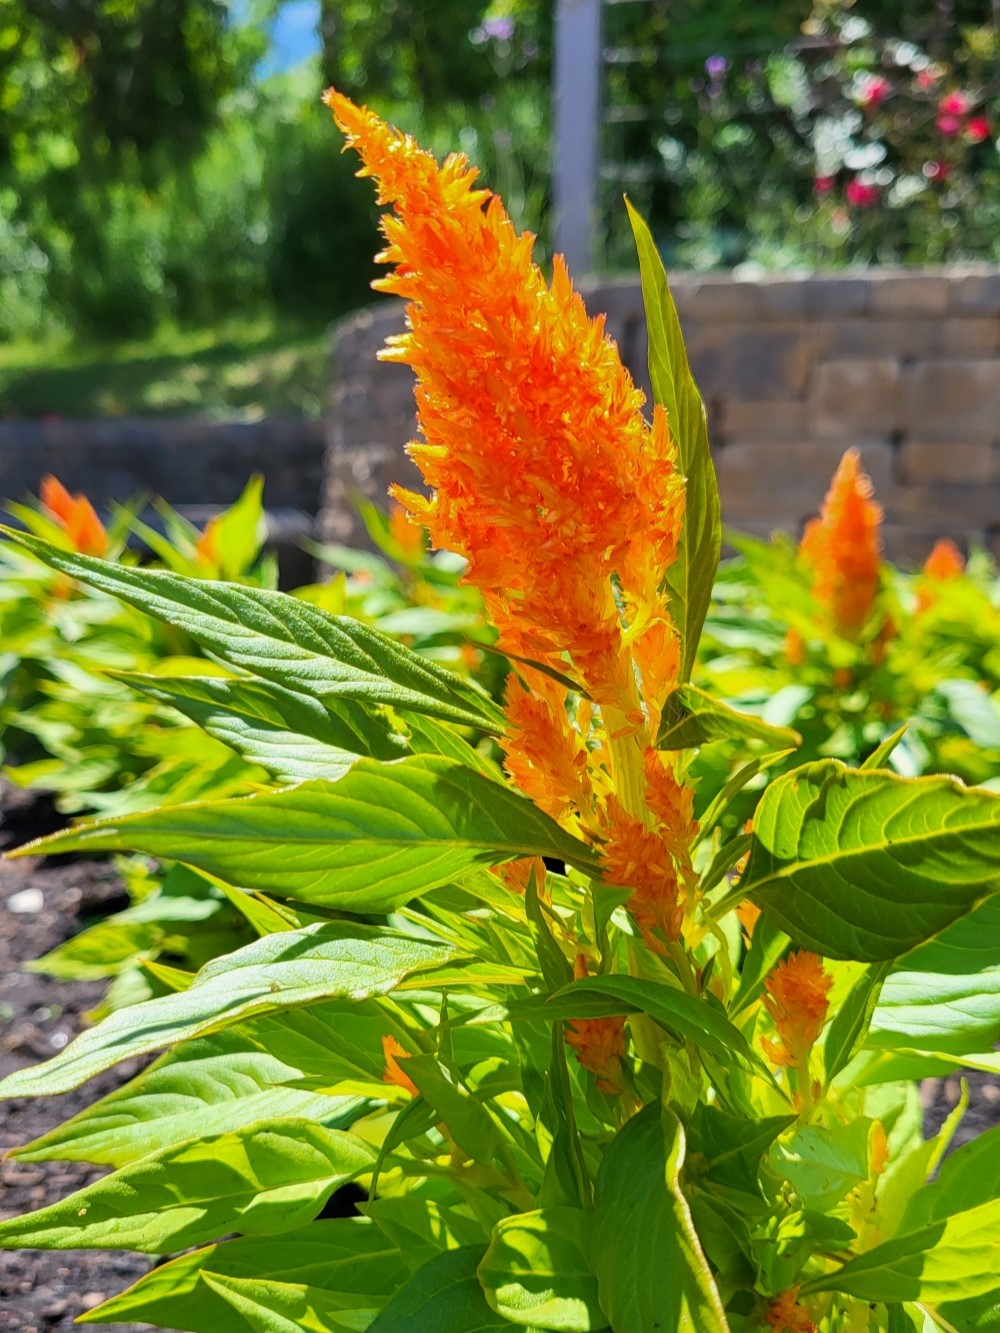 Bright orange blooms on a tall stalk